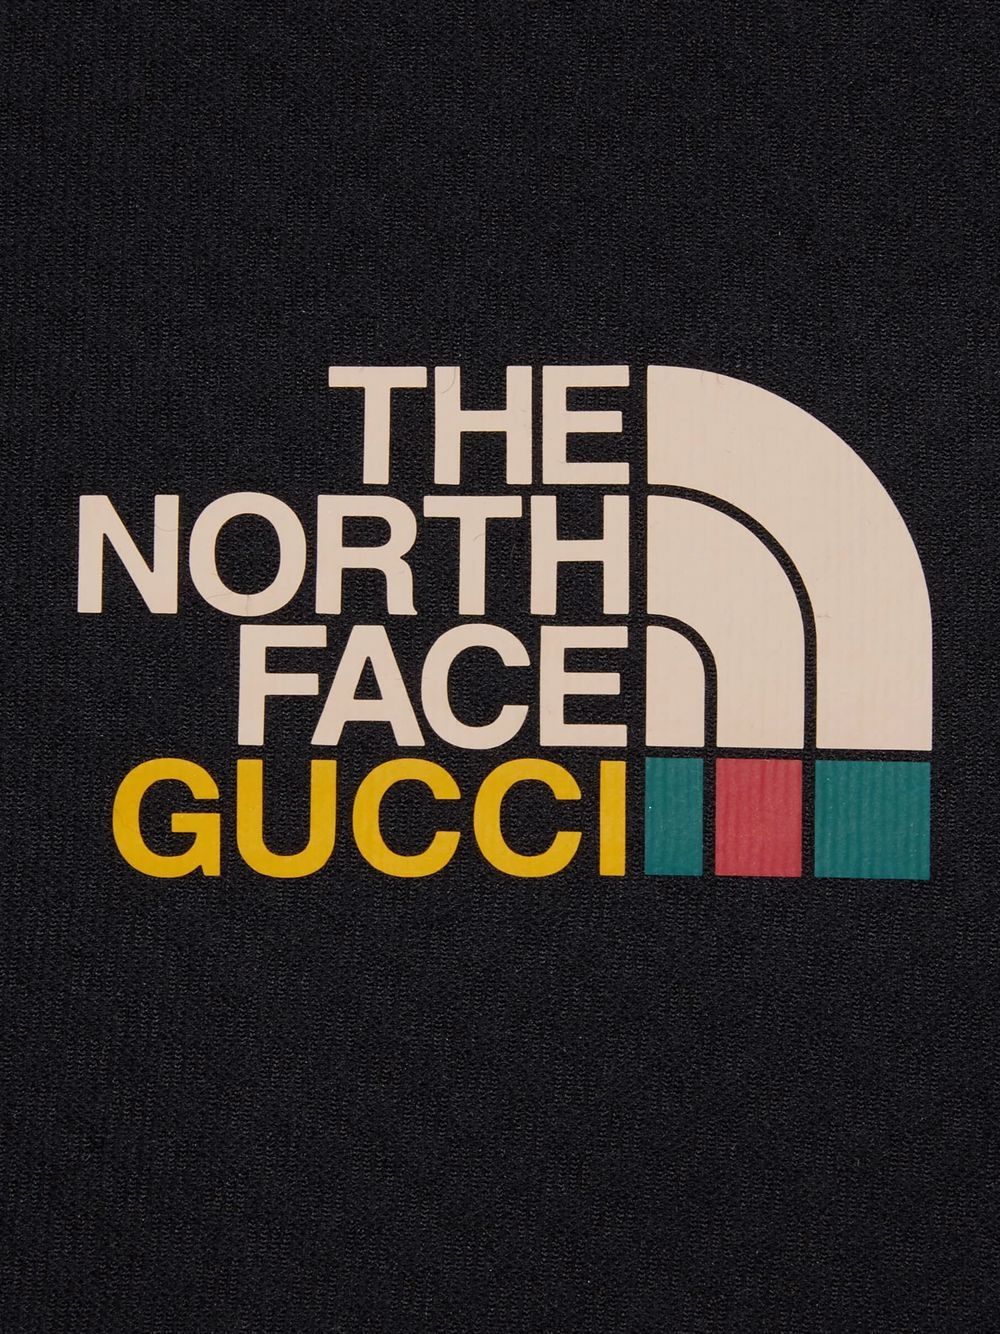 The North Face x Gucci sweatshirt in multicolor, GUCCI® US